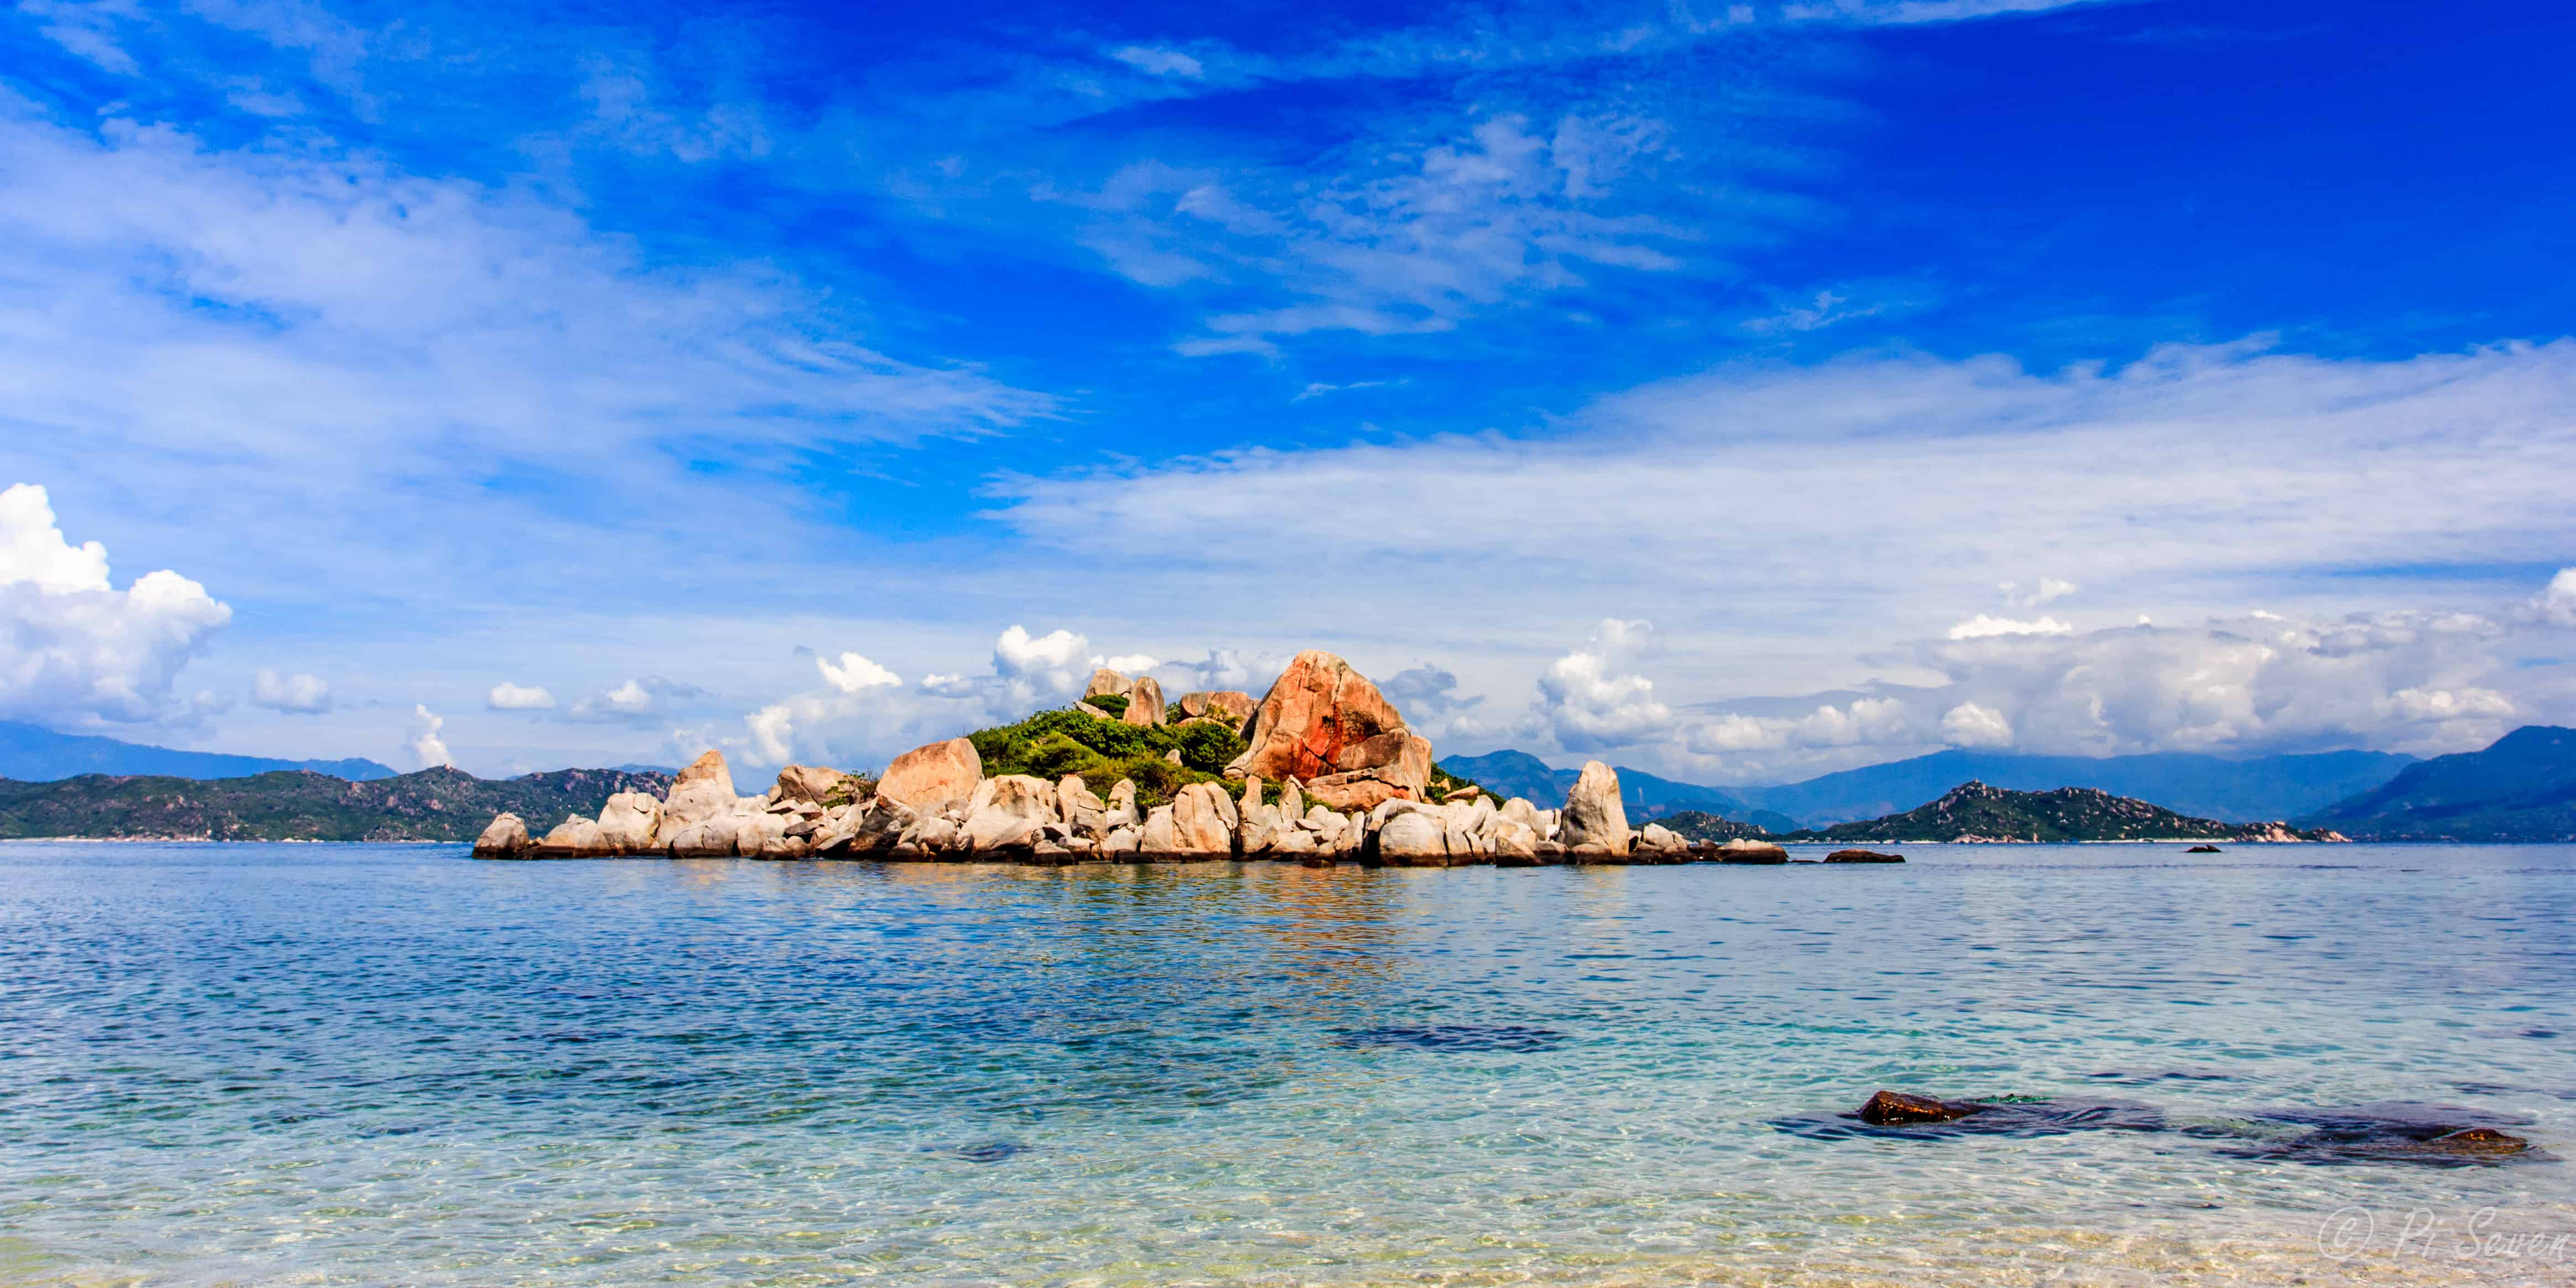 binh ba island compressed - Nha Trang Highlights & Travel Guide 2022